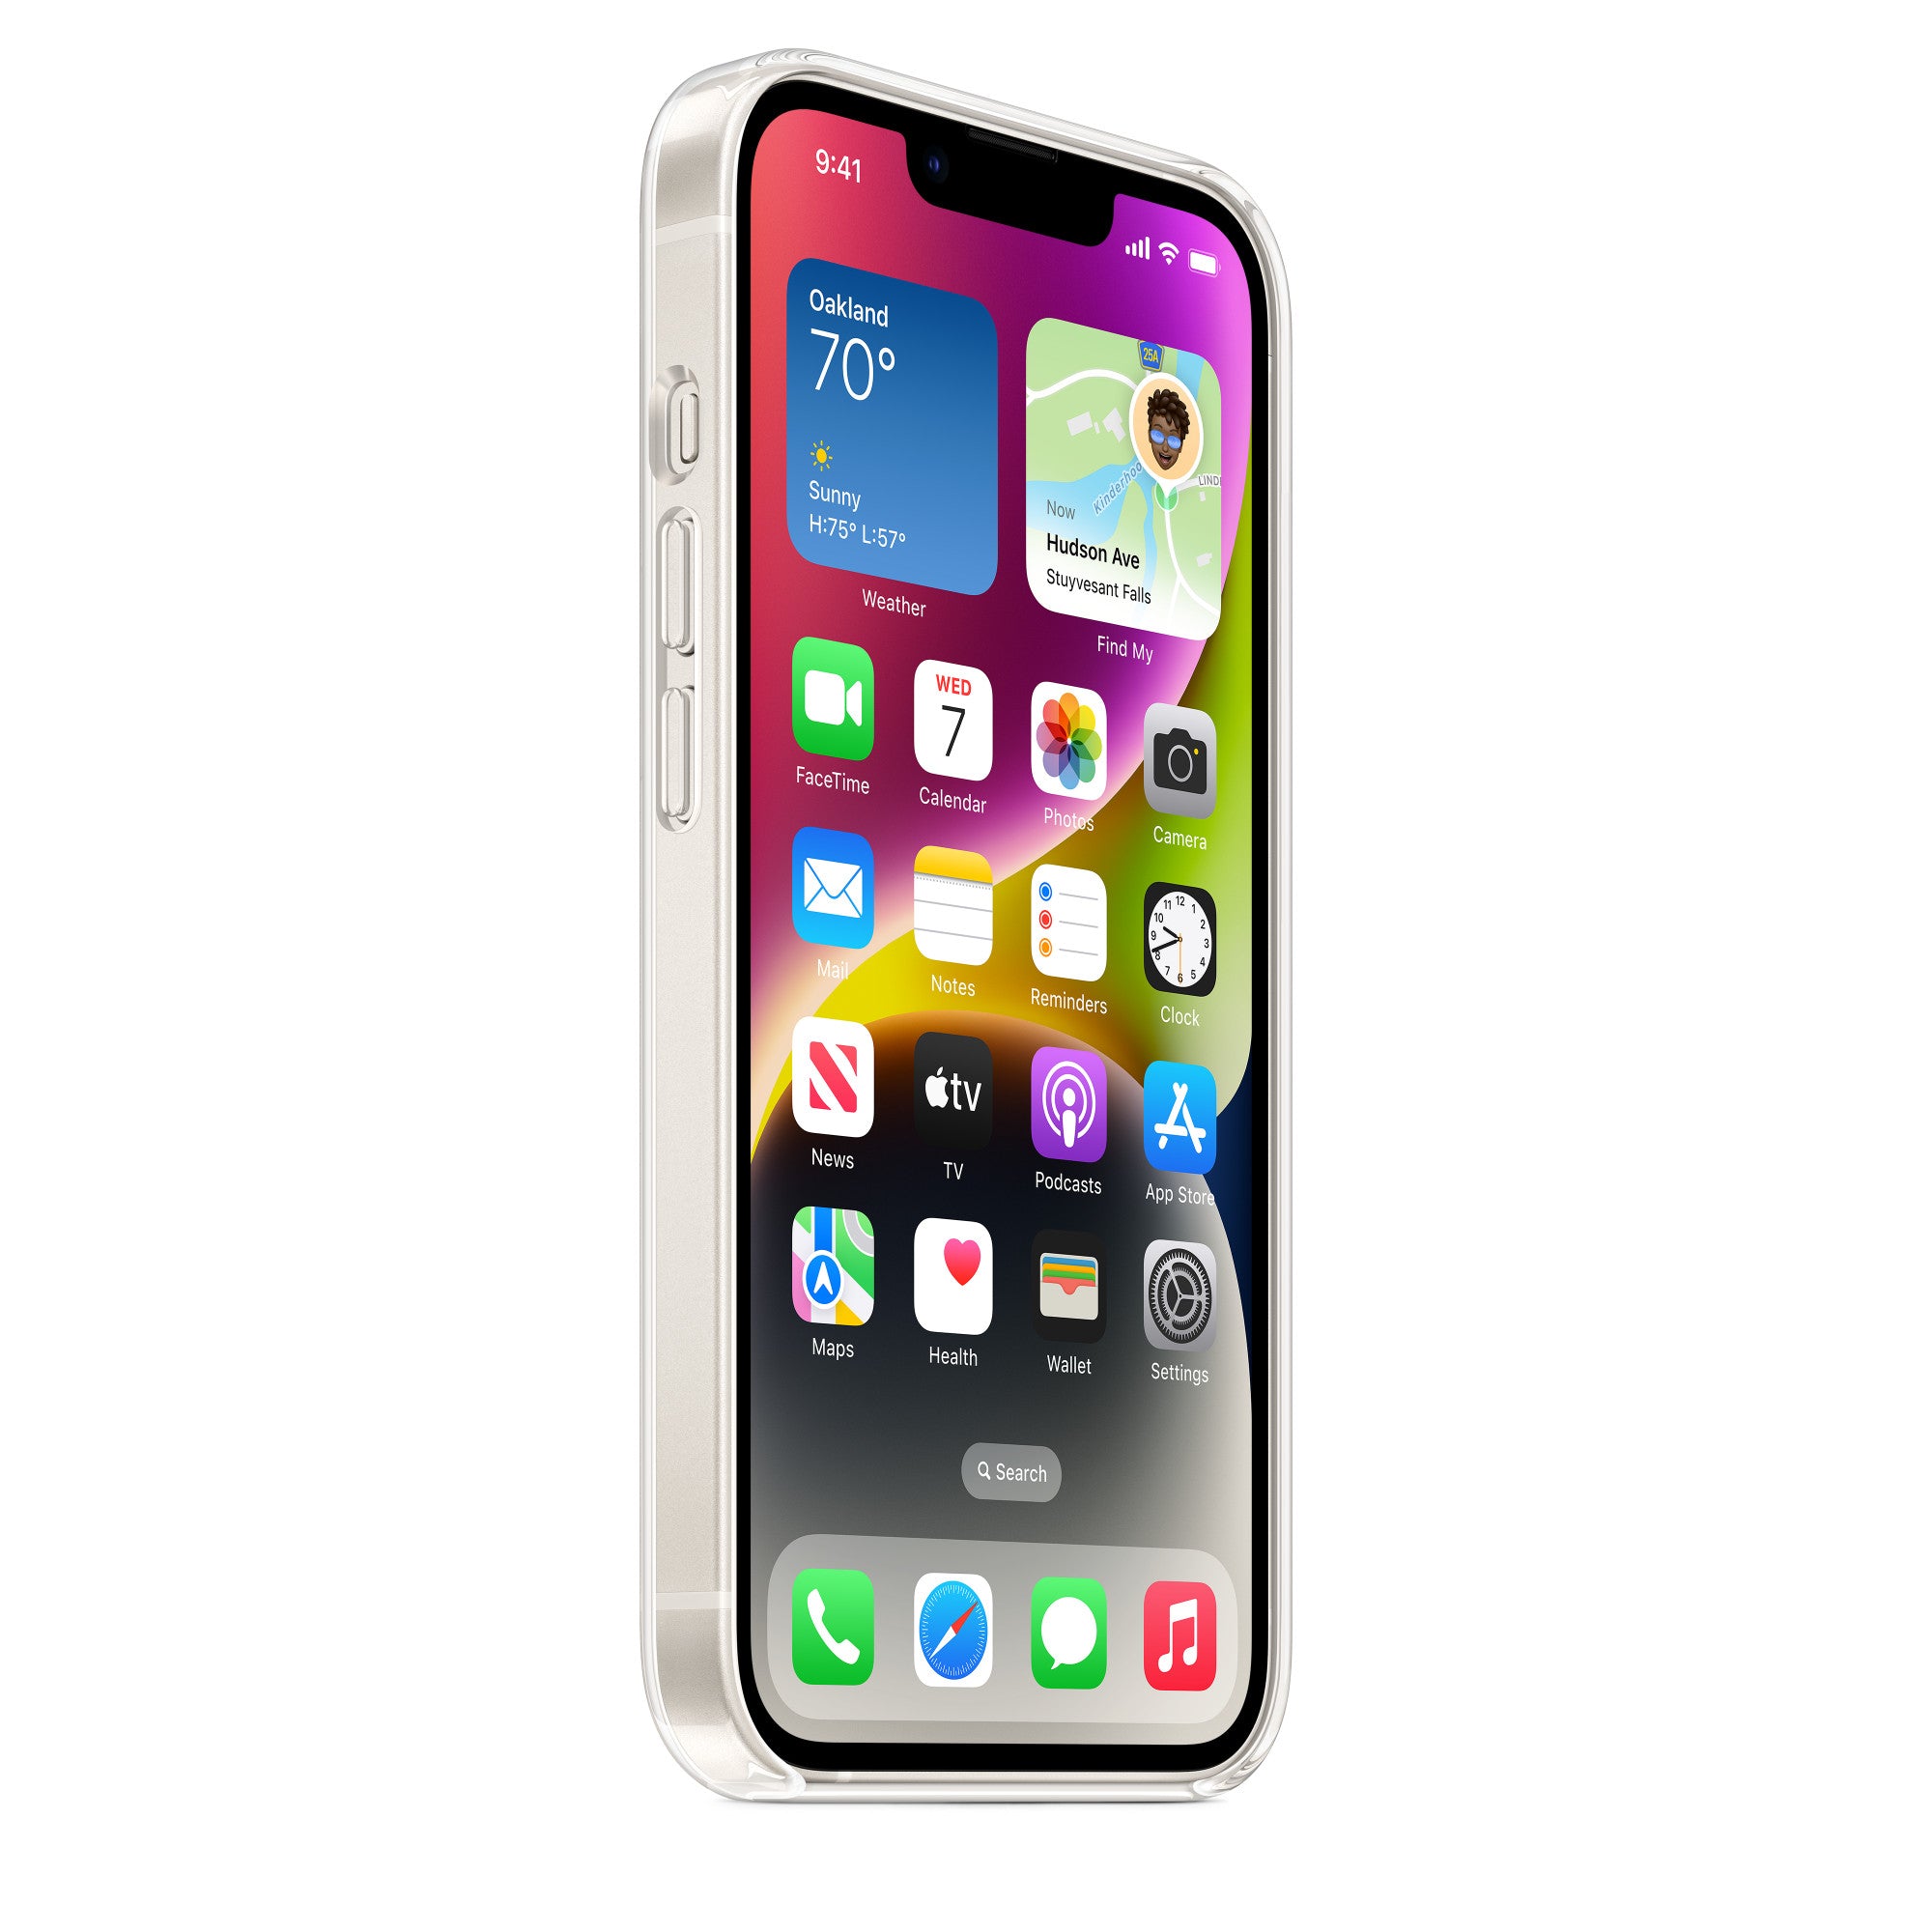 Funda Transparente con MagSafe iPhone 12 Pro Max